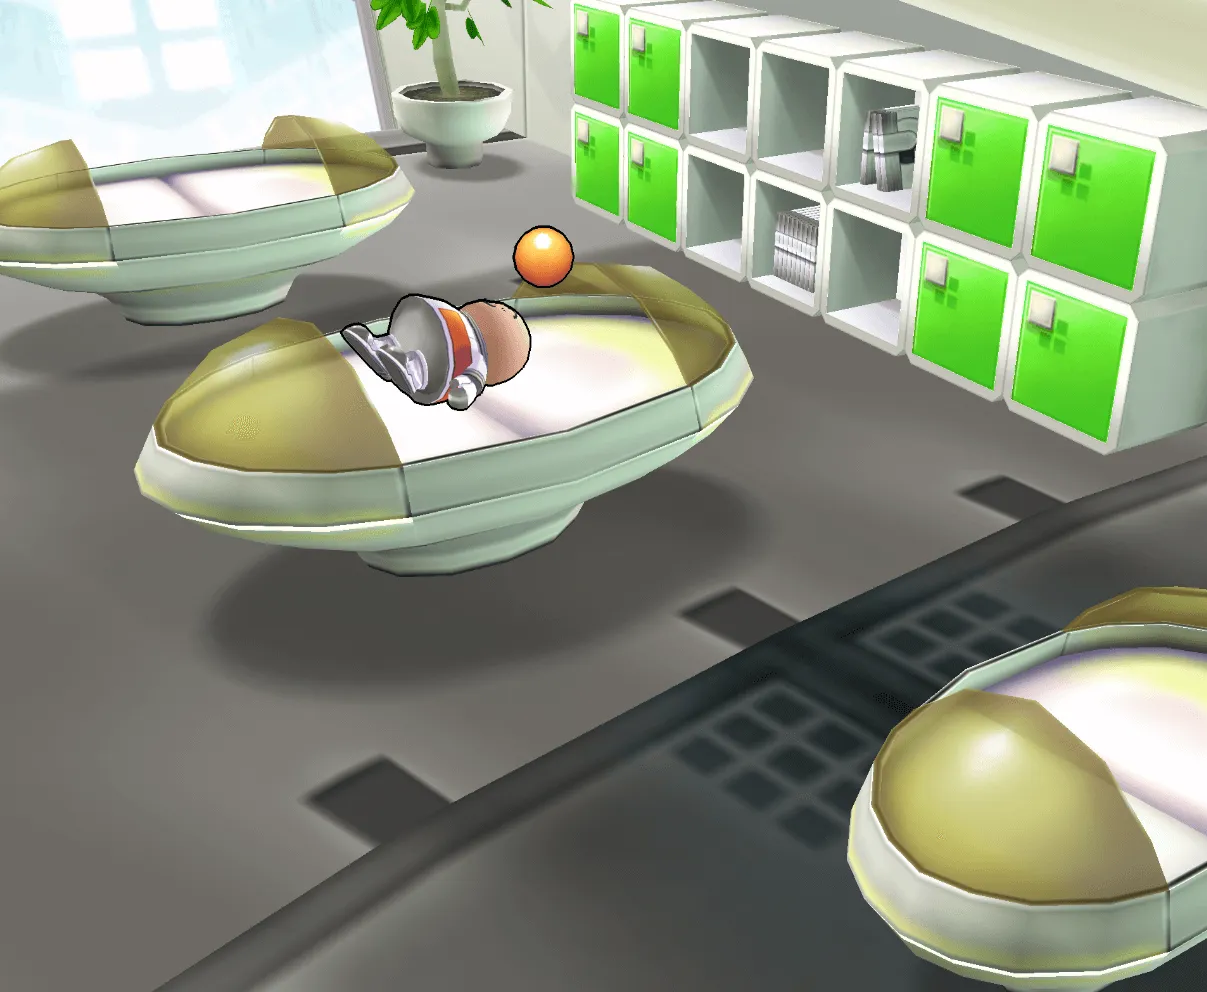 Opoona sleeping on a futuristic looking bed.